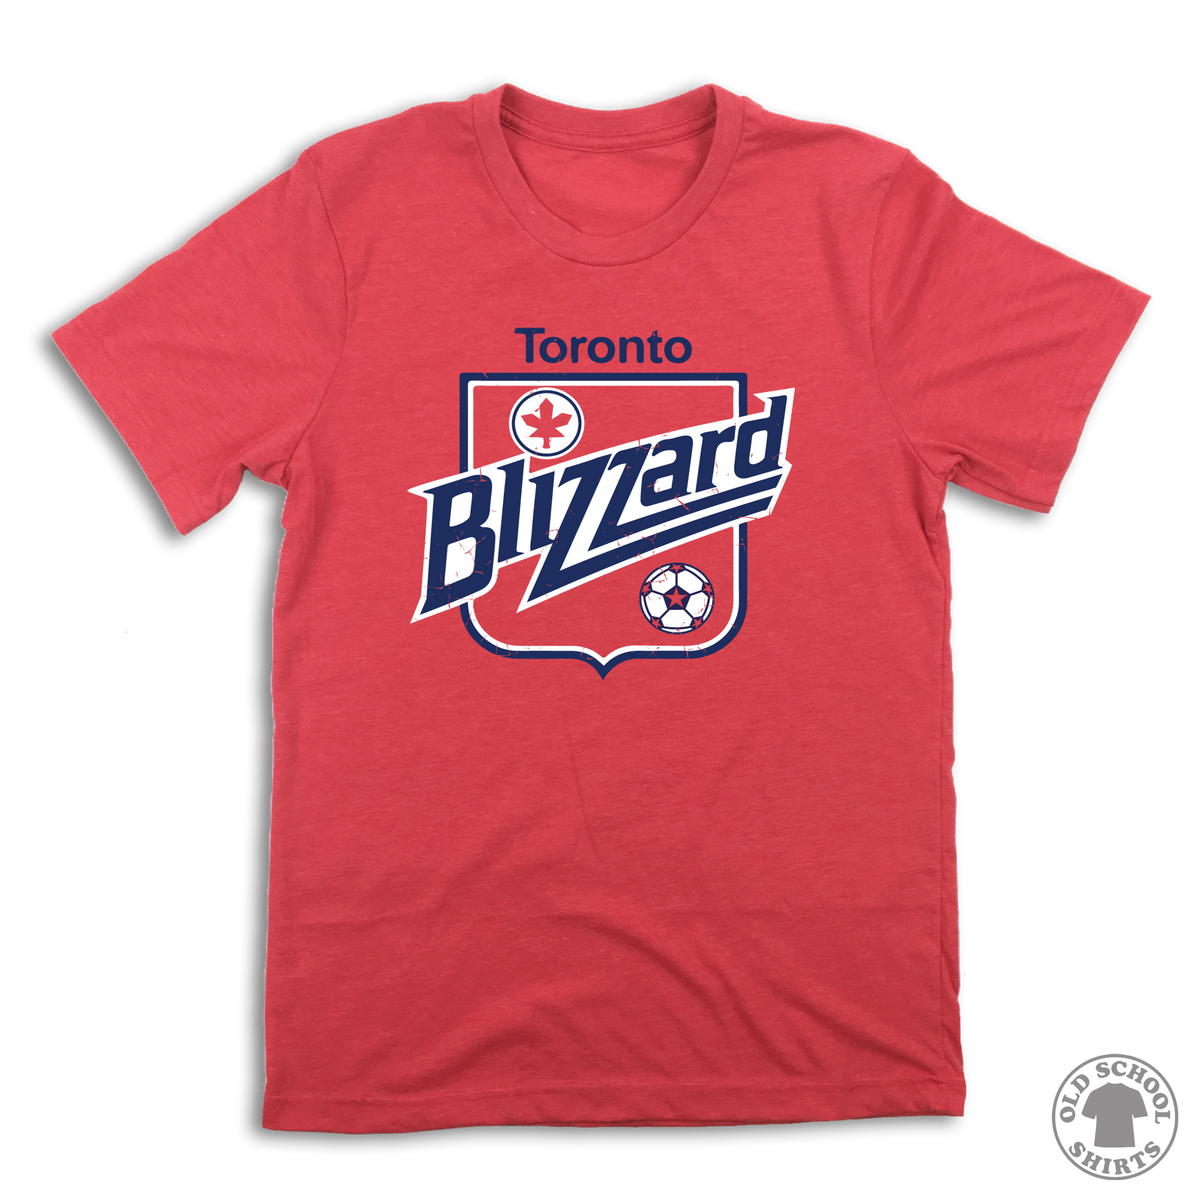 Toronto Blizzard T-shirt